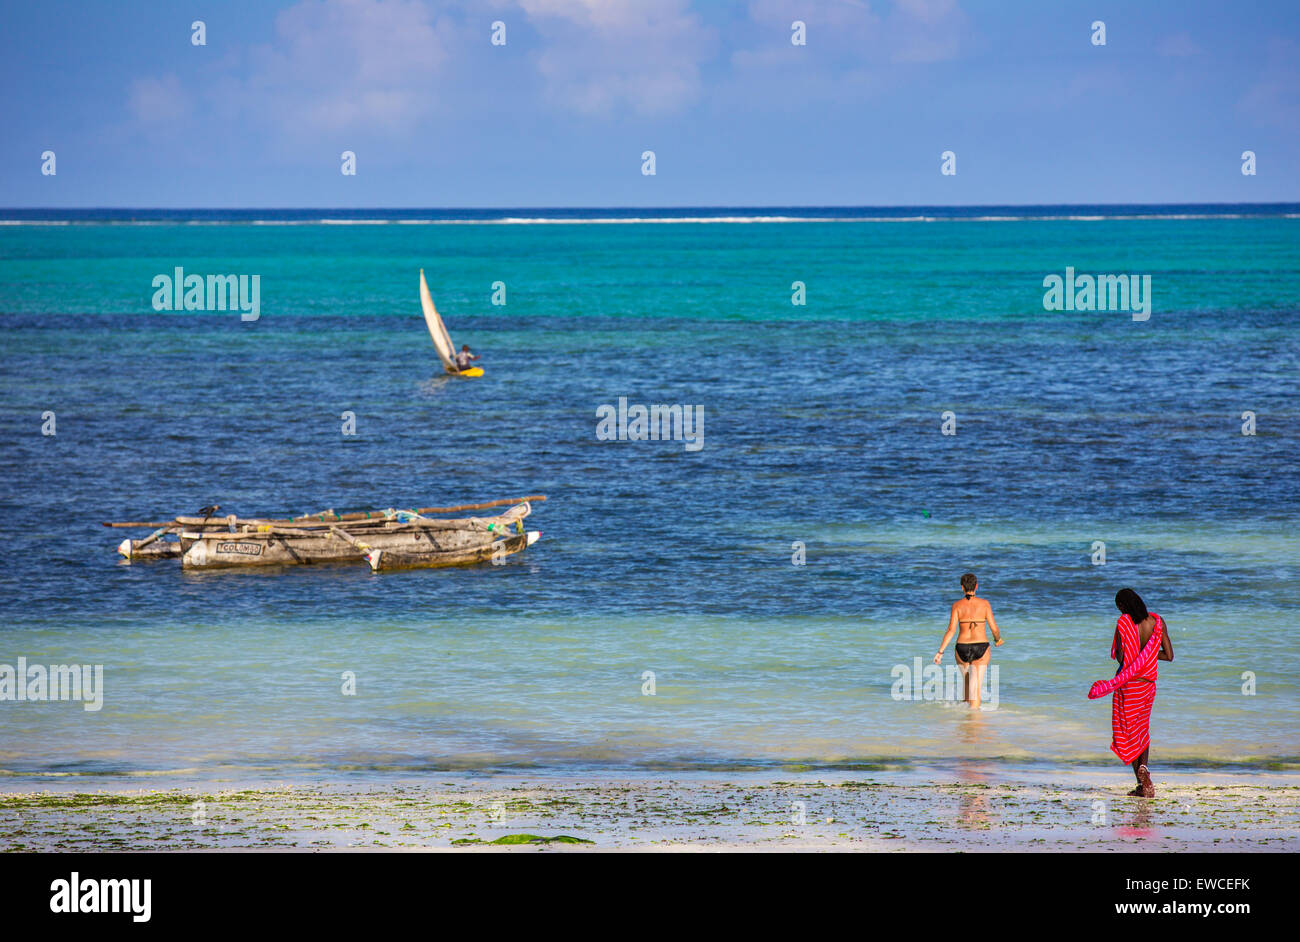 A masai man watches a tourist as she walks into the water in Zanzibar, Tanzania. Stock Photo